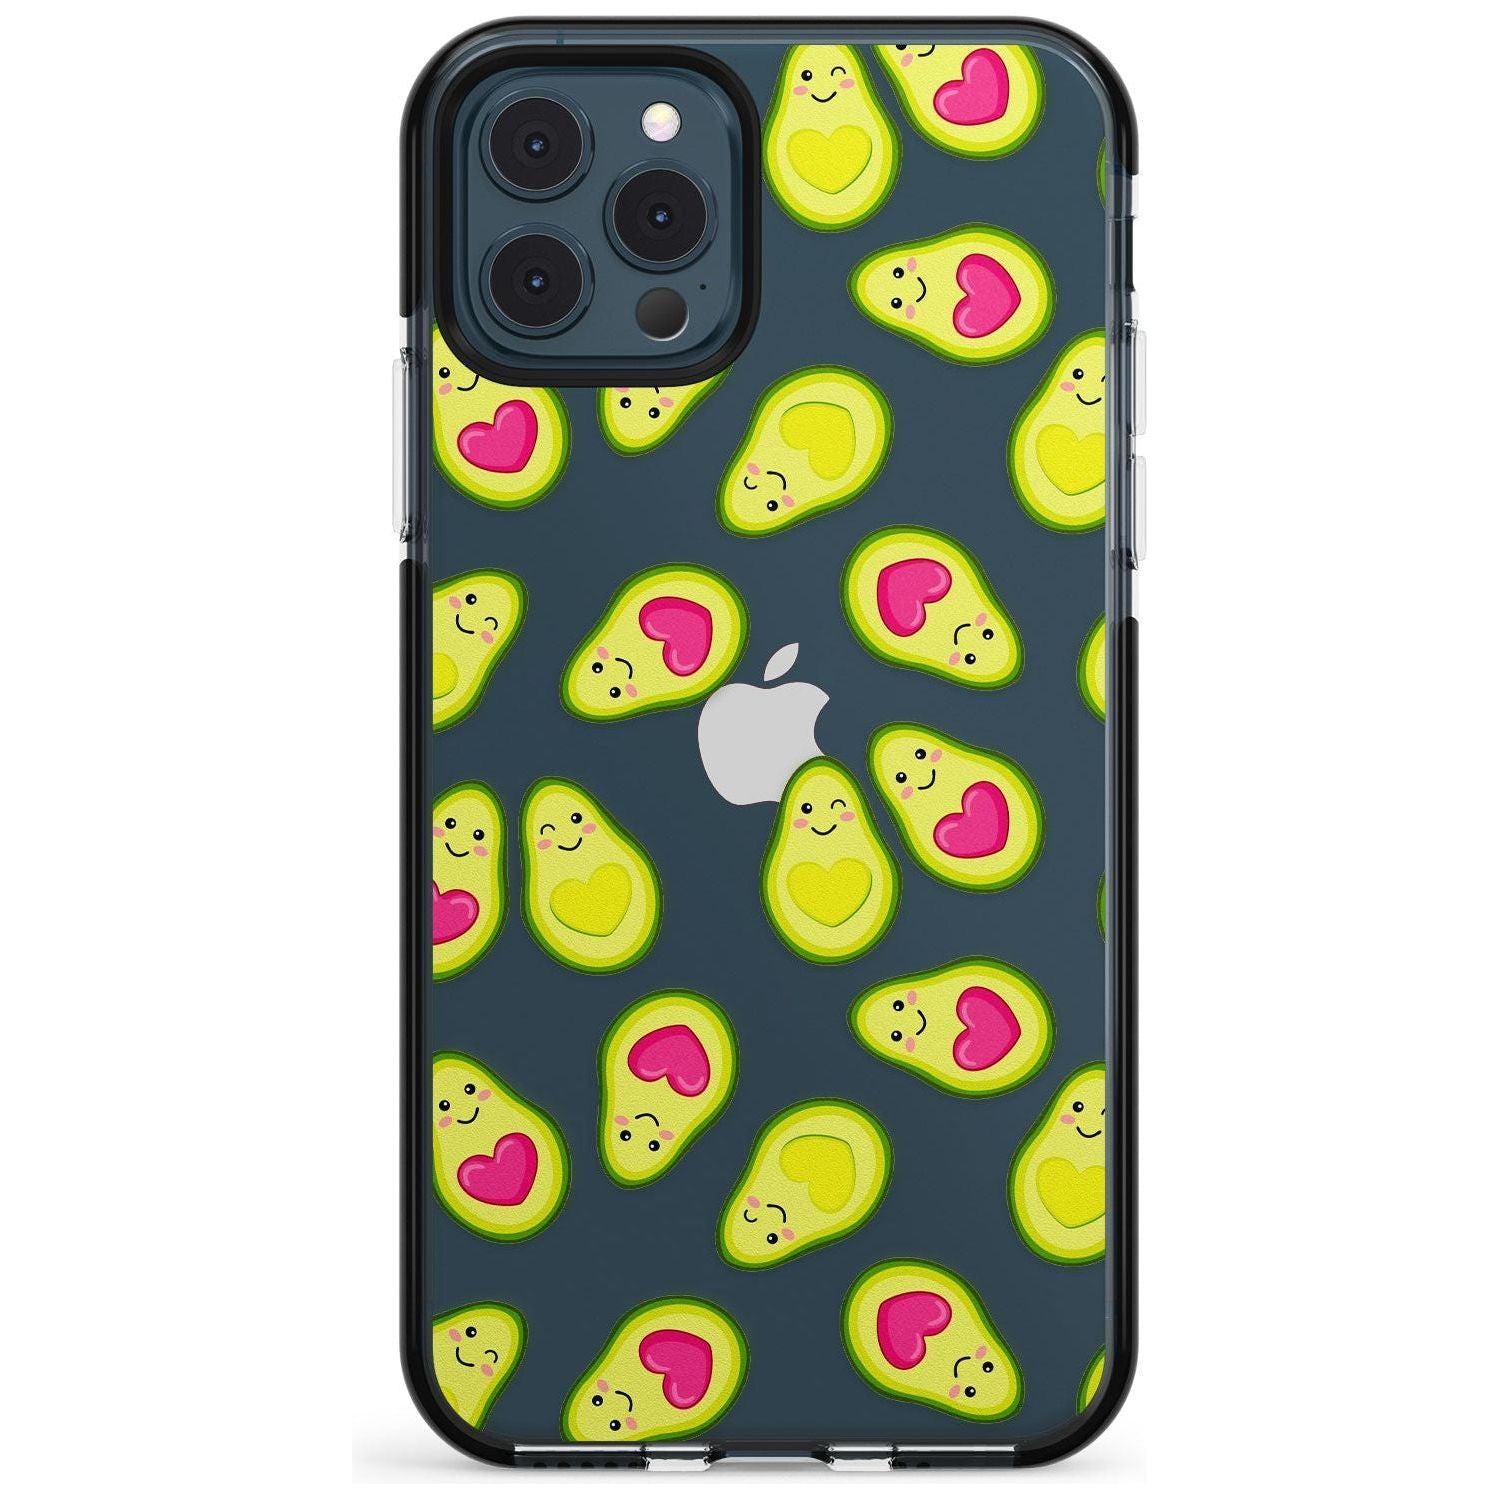 Avocado Love Black Impact Phone Case for iPhone 11